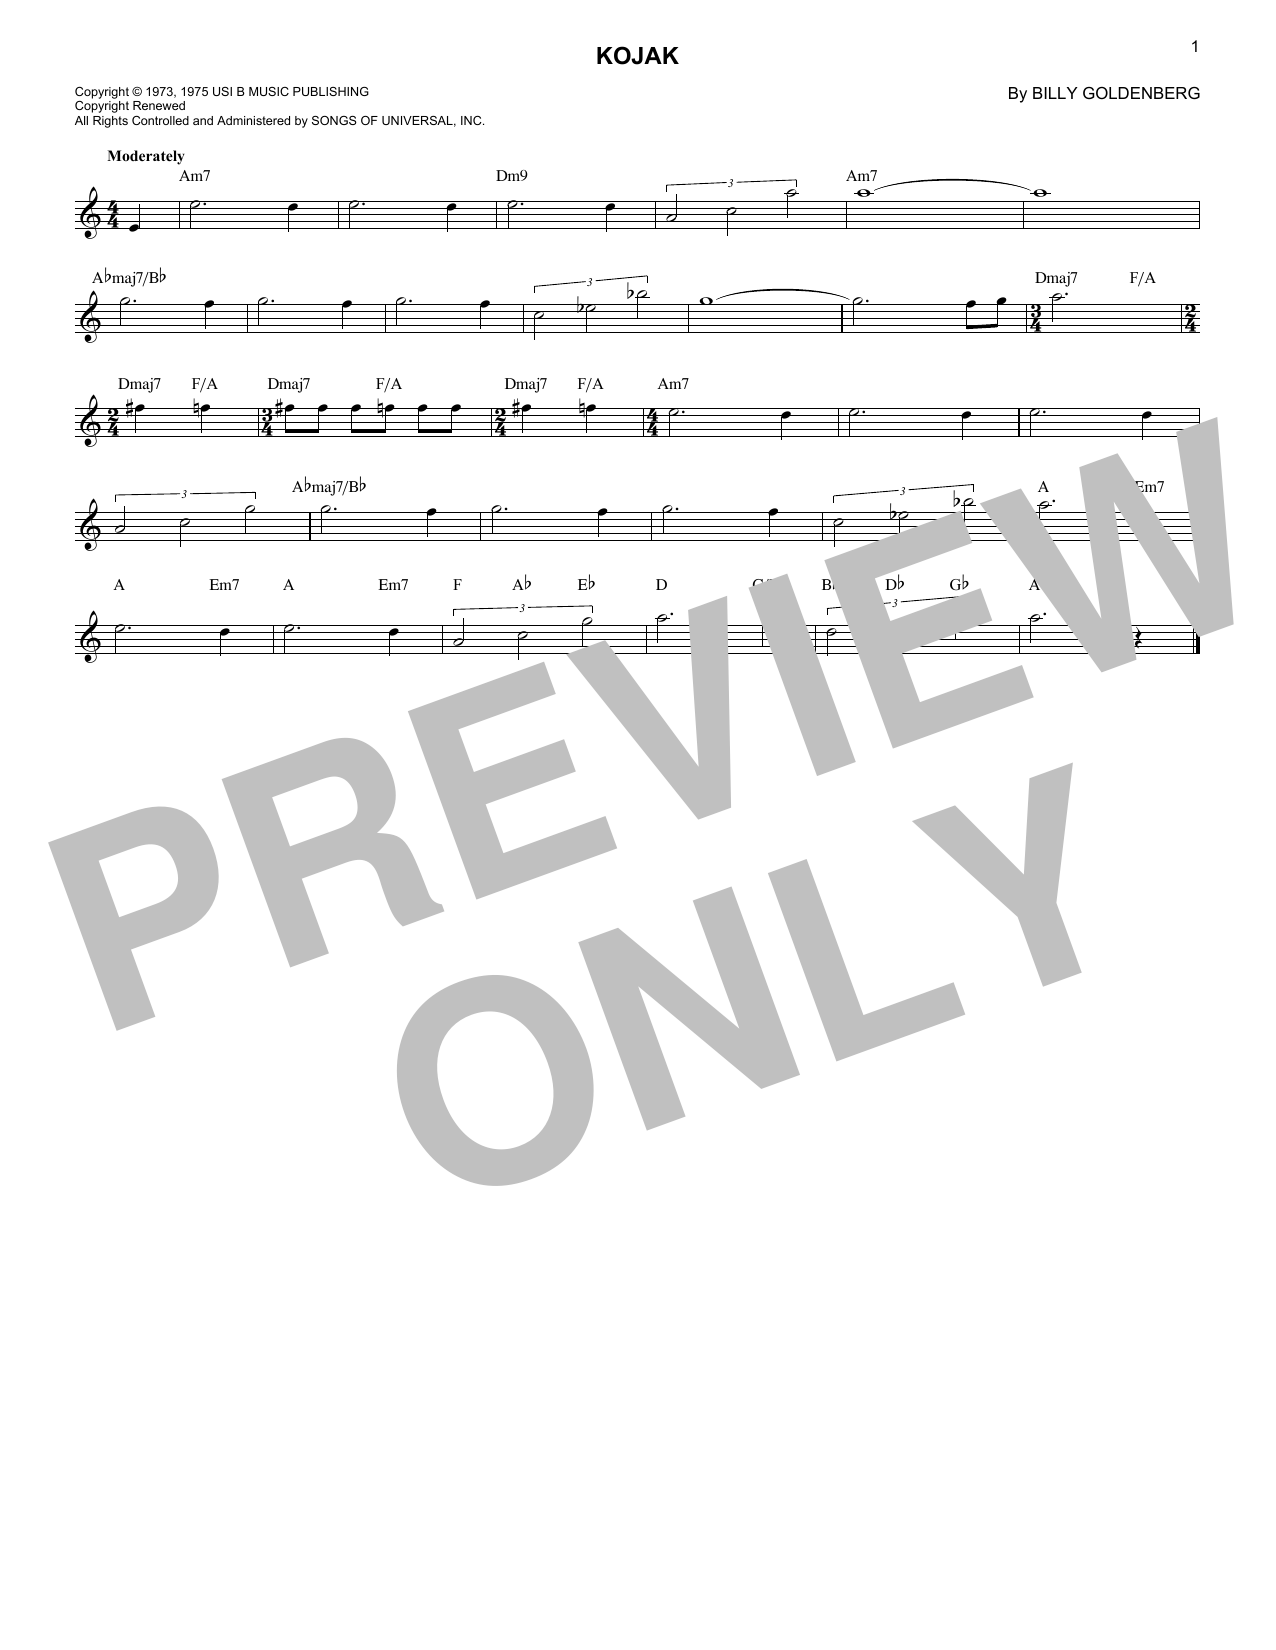 Billy Goldenberg Kojak Sheet Music Notes & Chords for Lead Sheet / Fake Book - Download or Print PDF